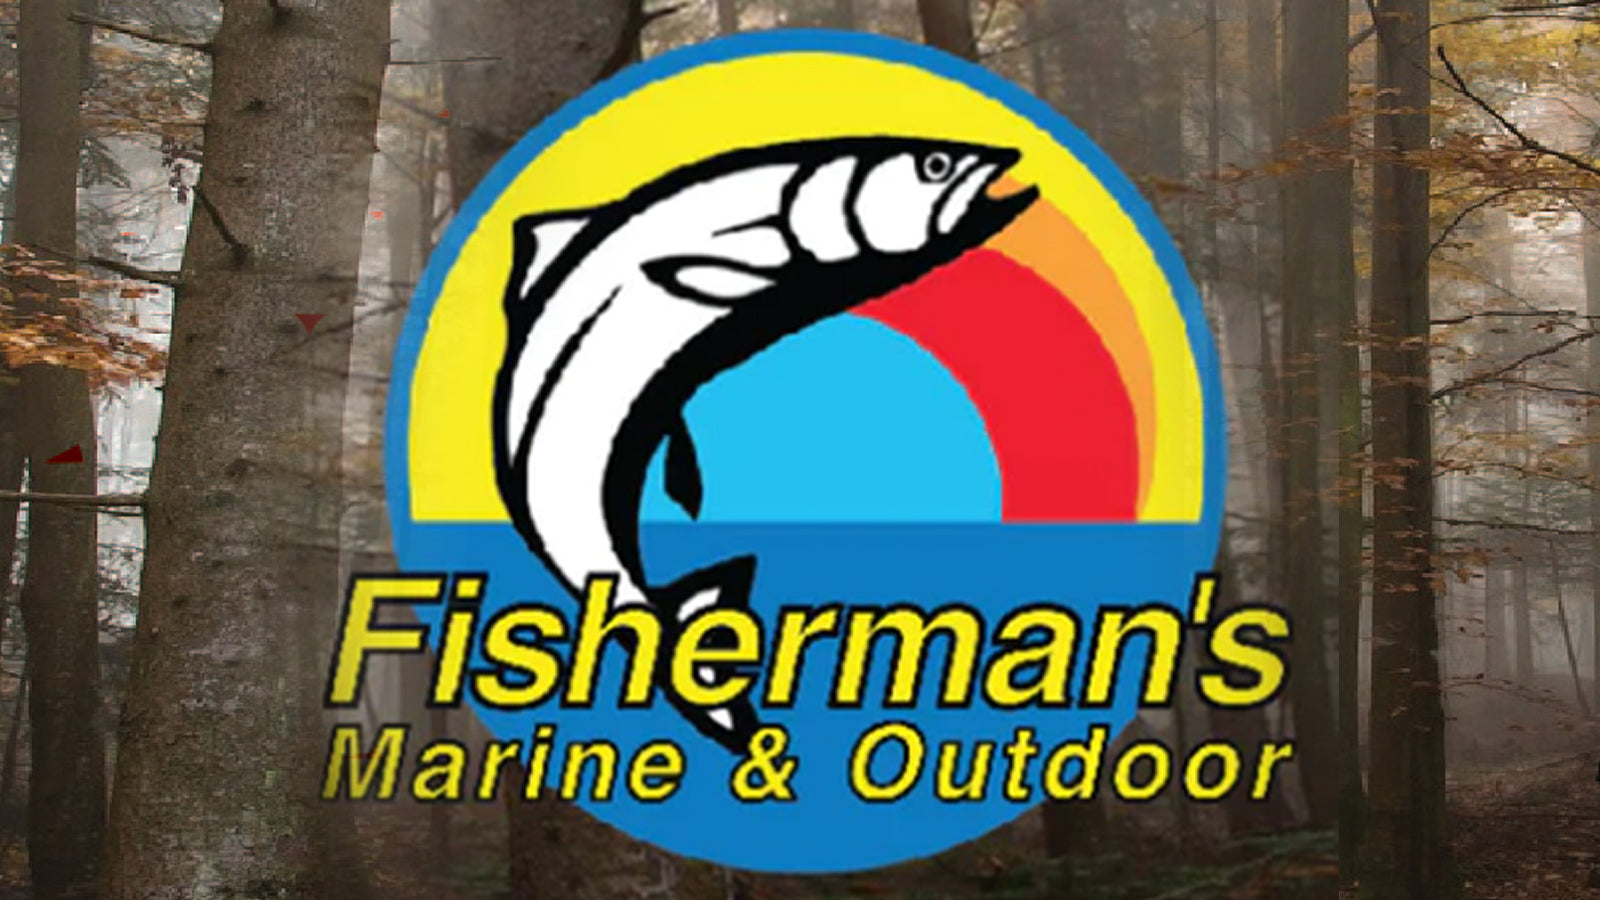 (c) Fishermans-marine.com